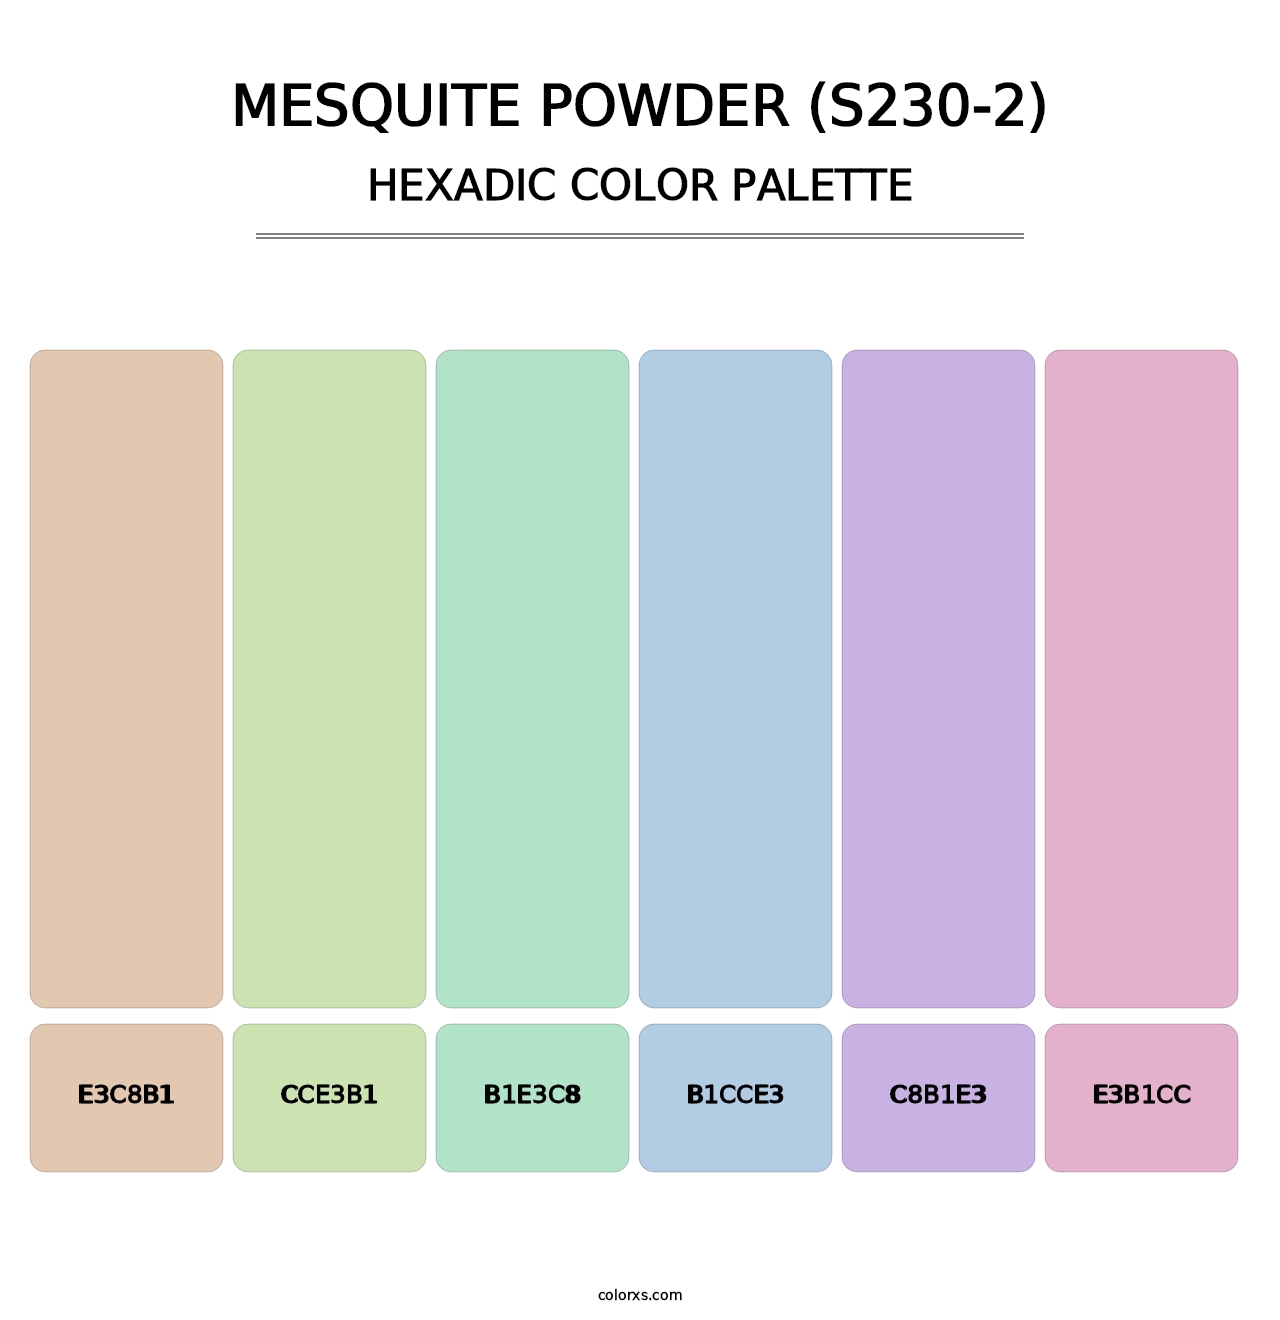 Mesquite Powder (S230-2) - Hexadic Color Palette